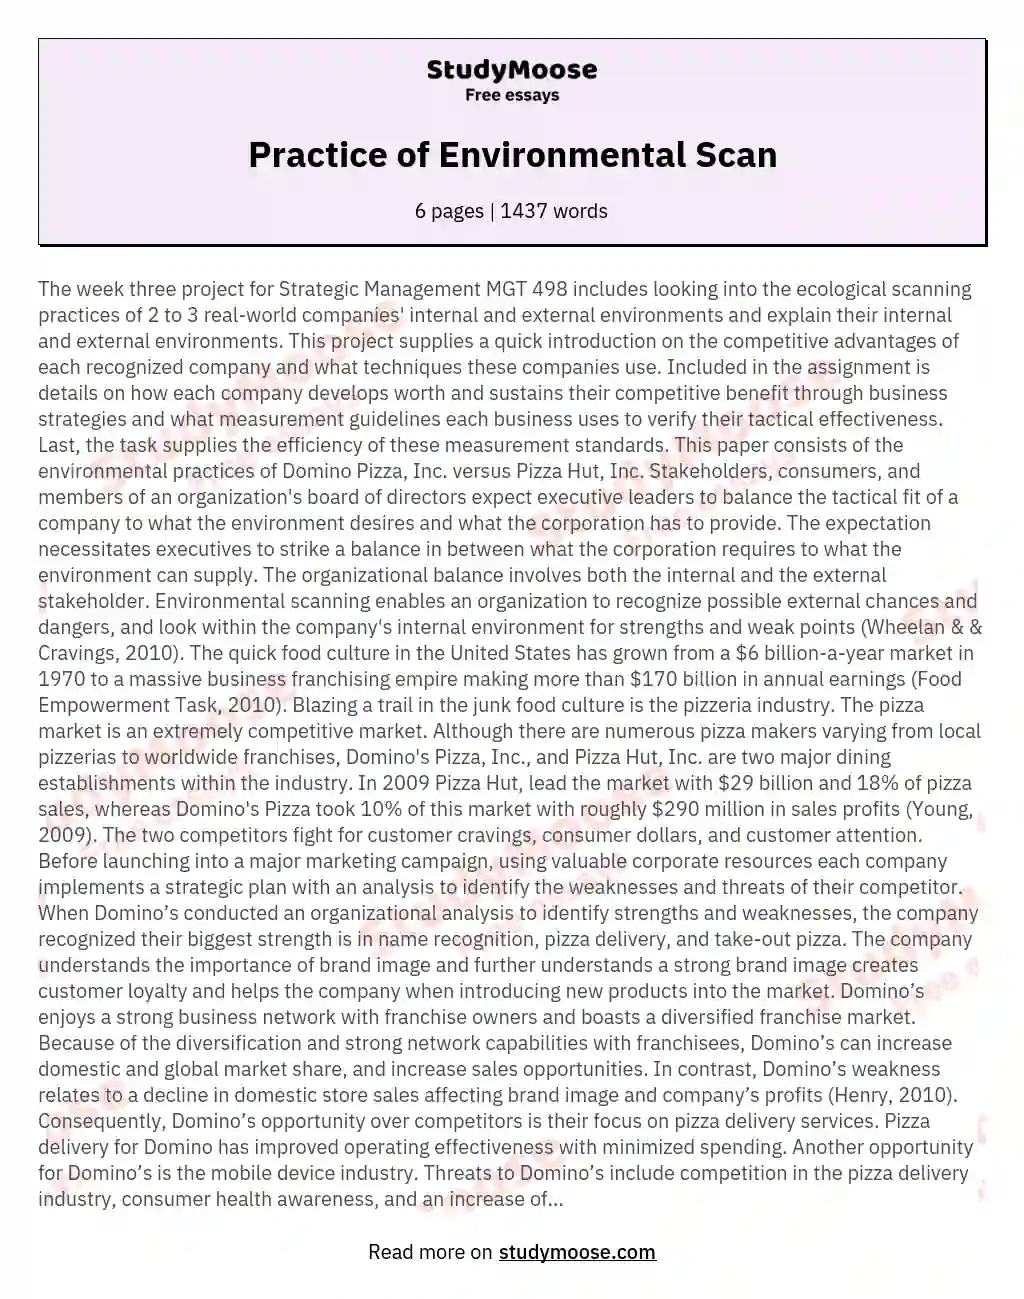 Practice of Environmental Scan essay